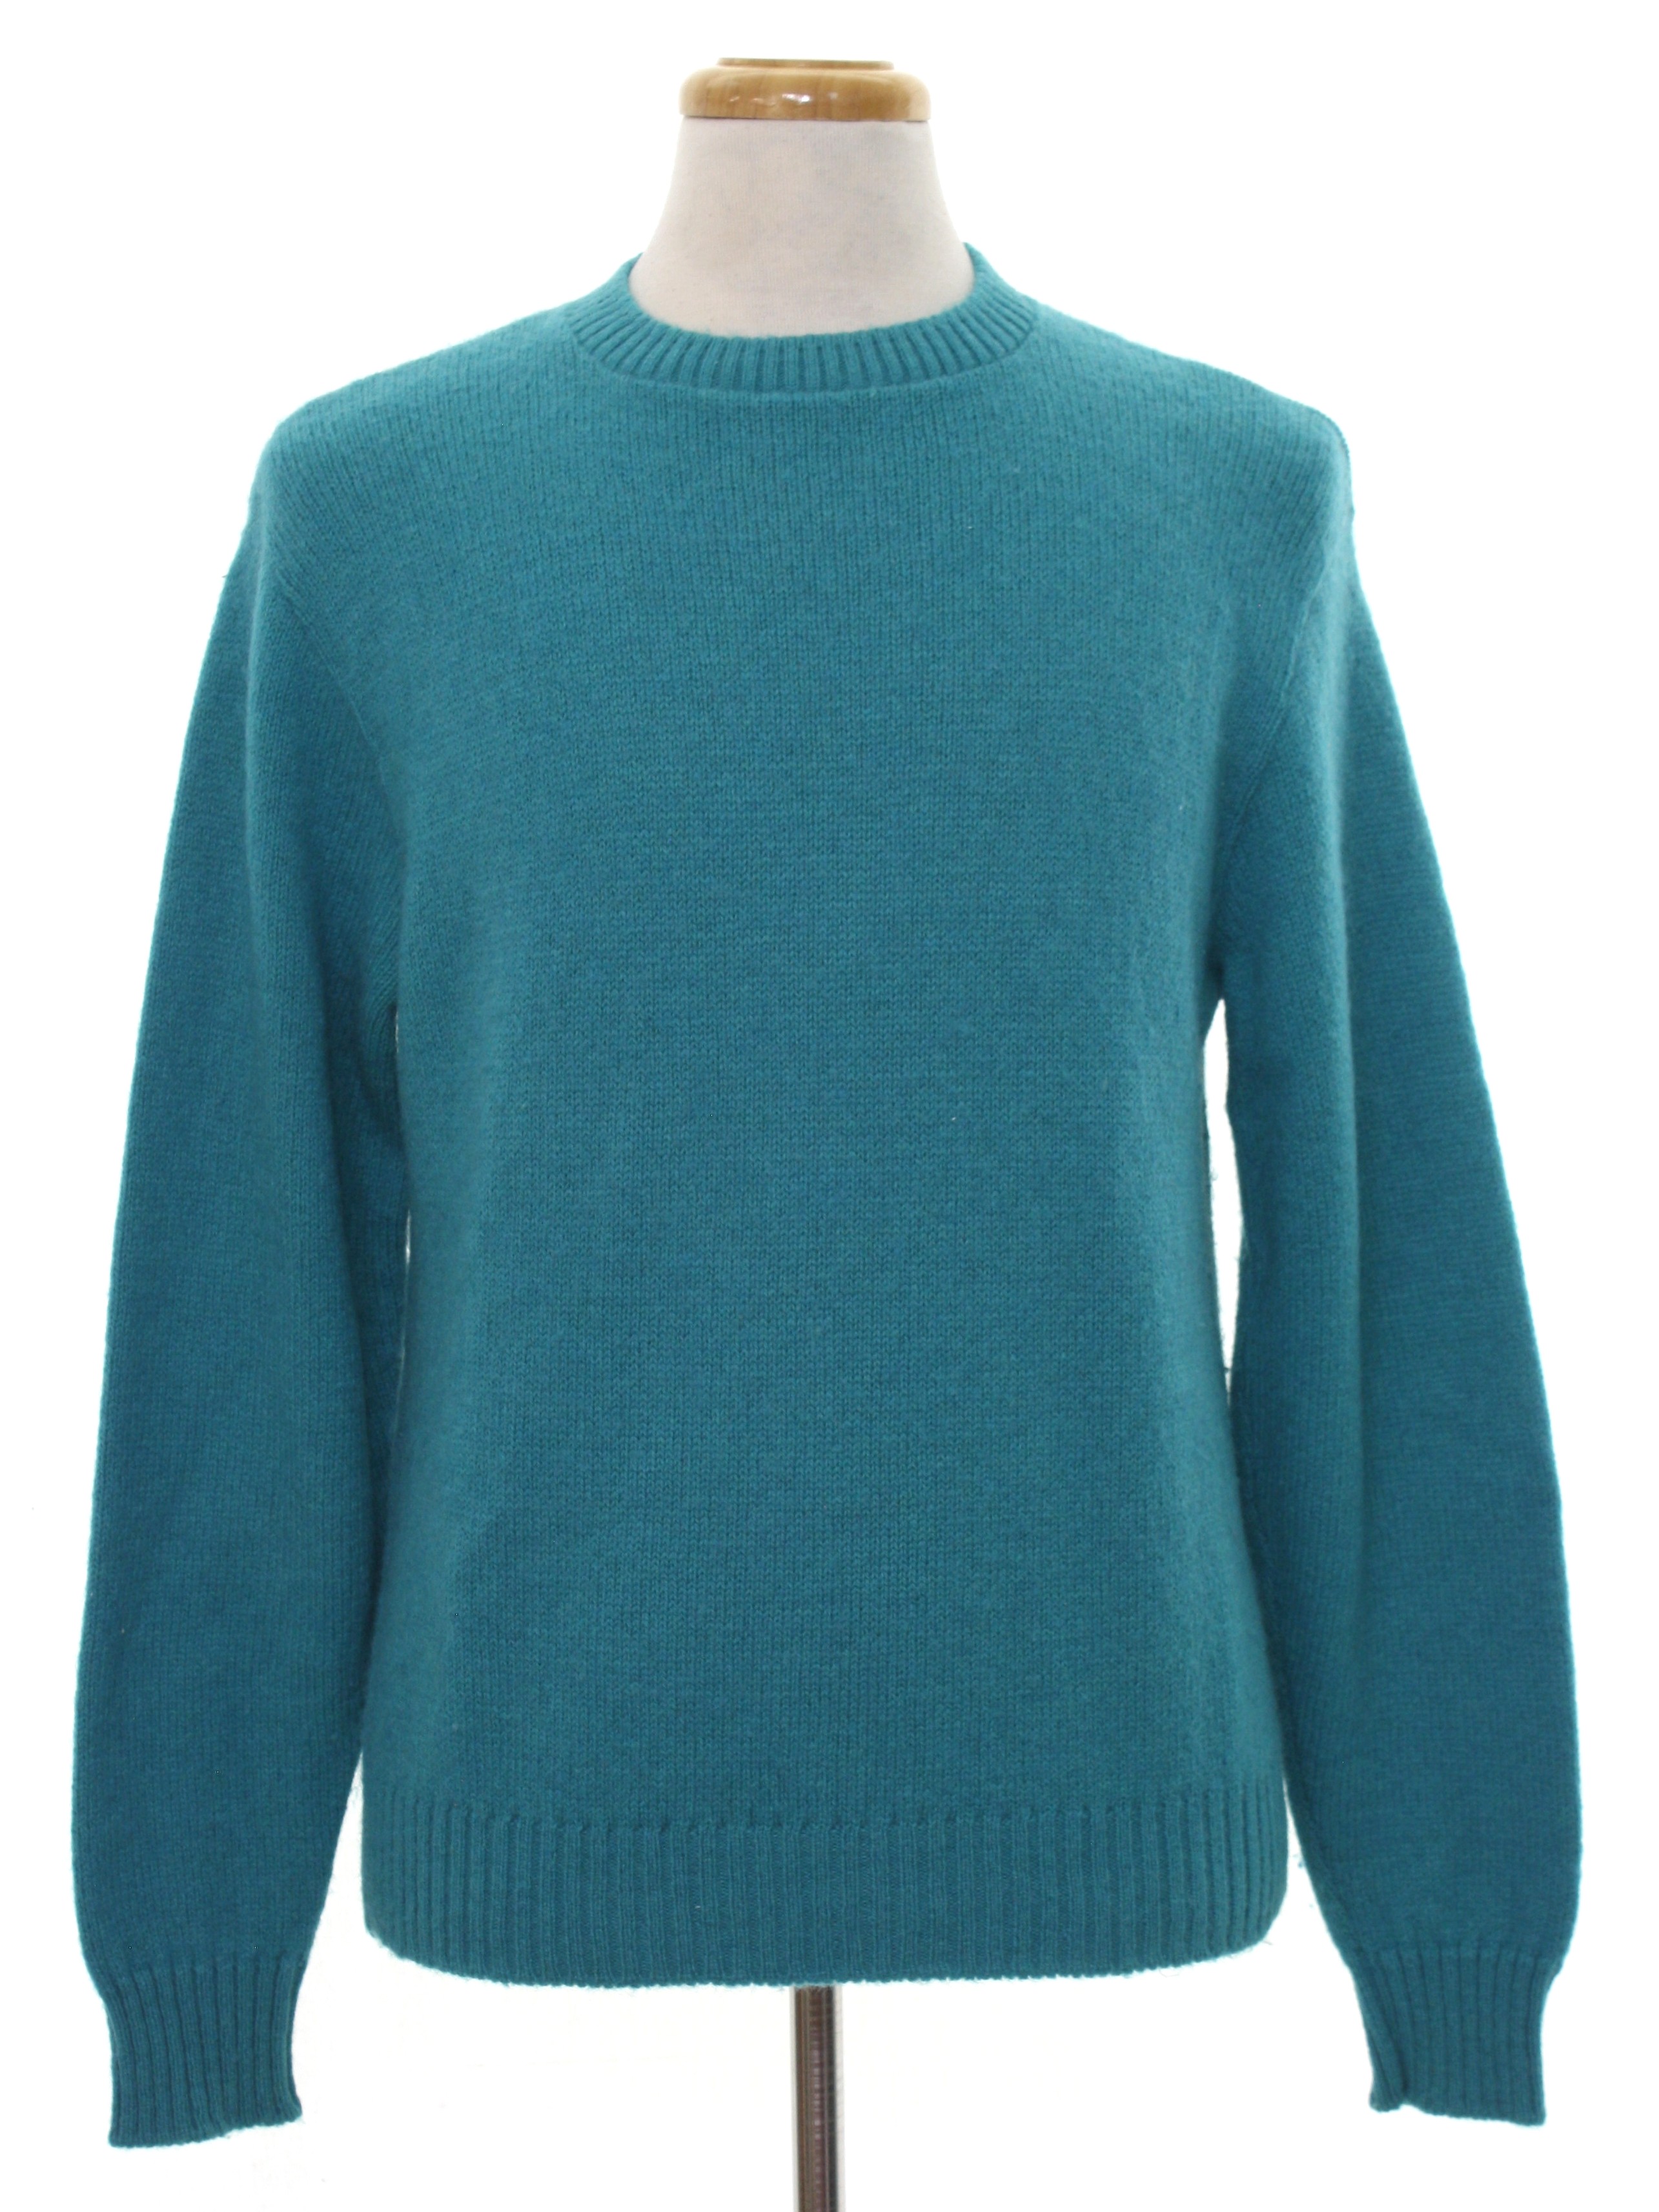 Retro Eighties Sweater: 80s -Jantzen- Mens turquoise background wool ...